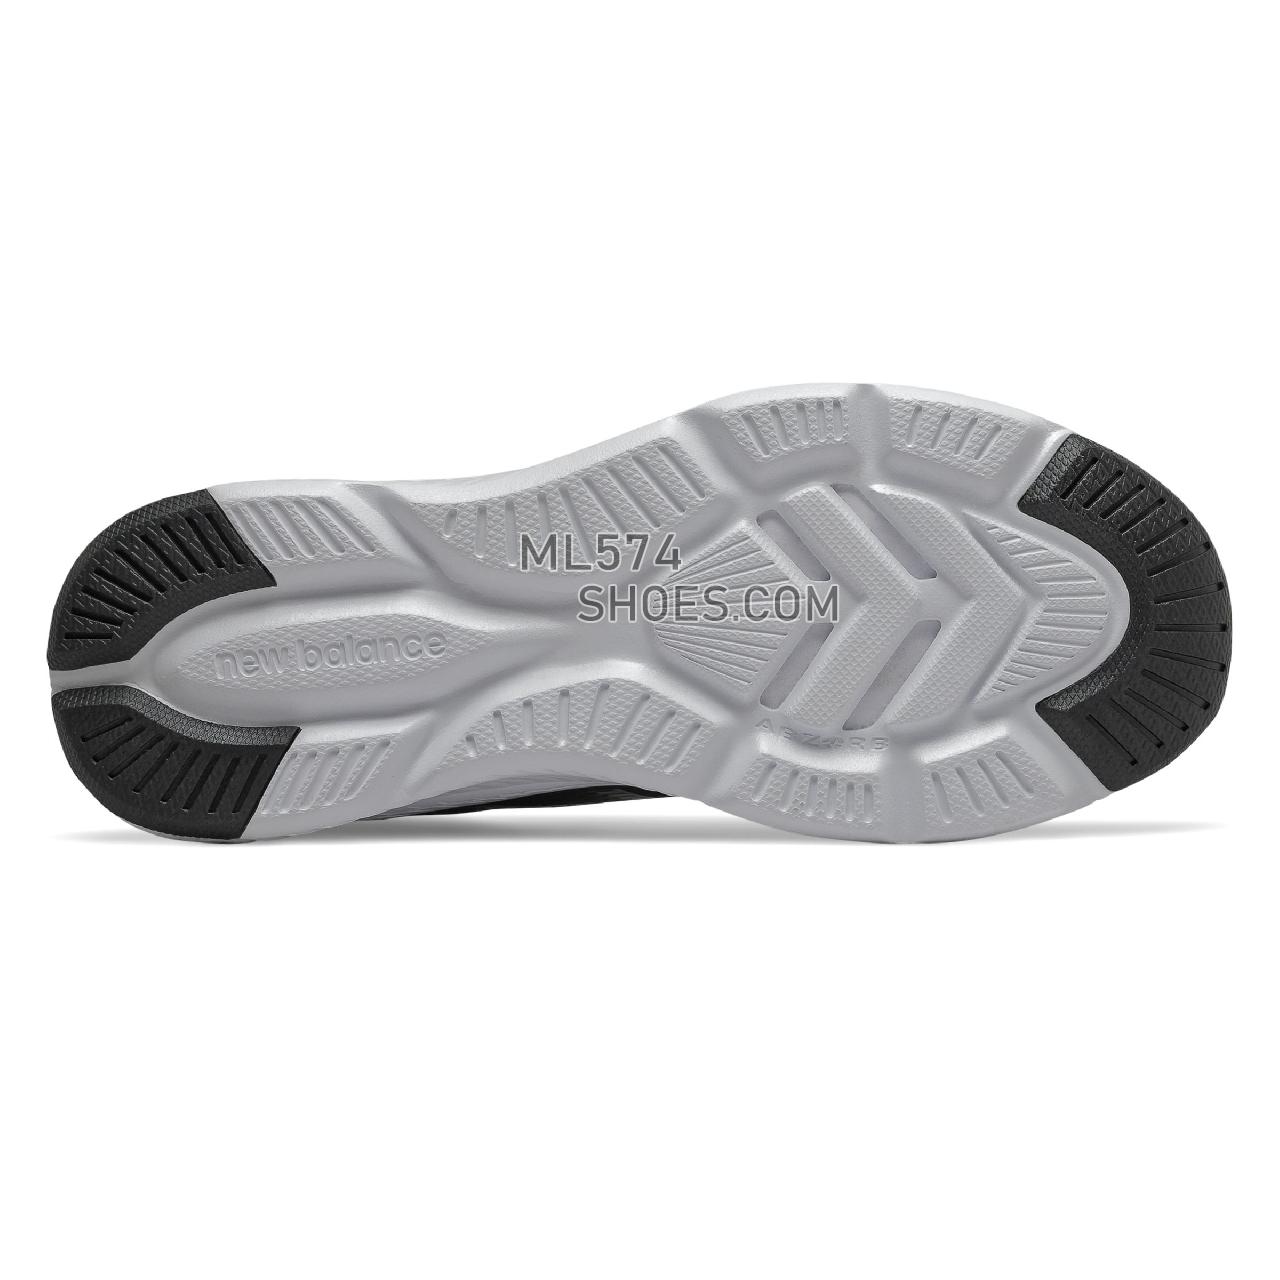 New Balance DRFT - Men's Classic Sneakers - Black with Silver Metallic - MDRFTLK1